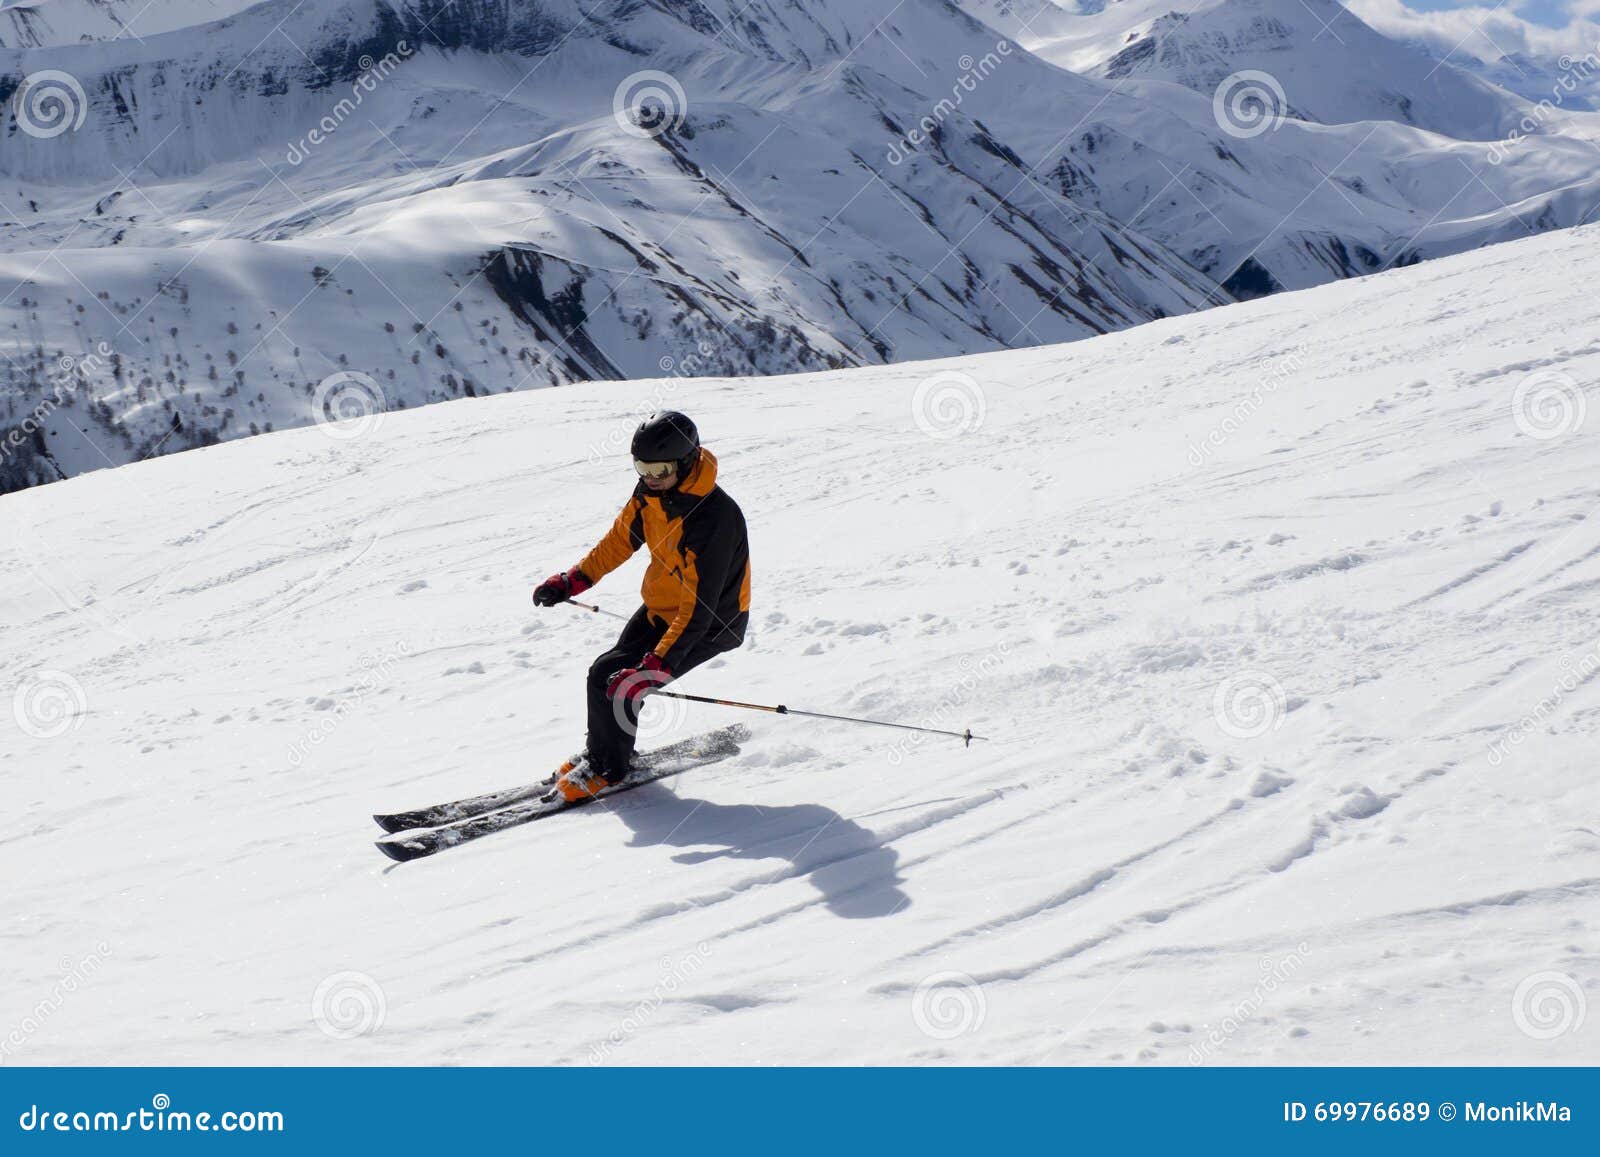 Skier Going Down the Mountain Stock Image - Image of touring, peak ...